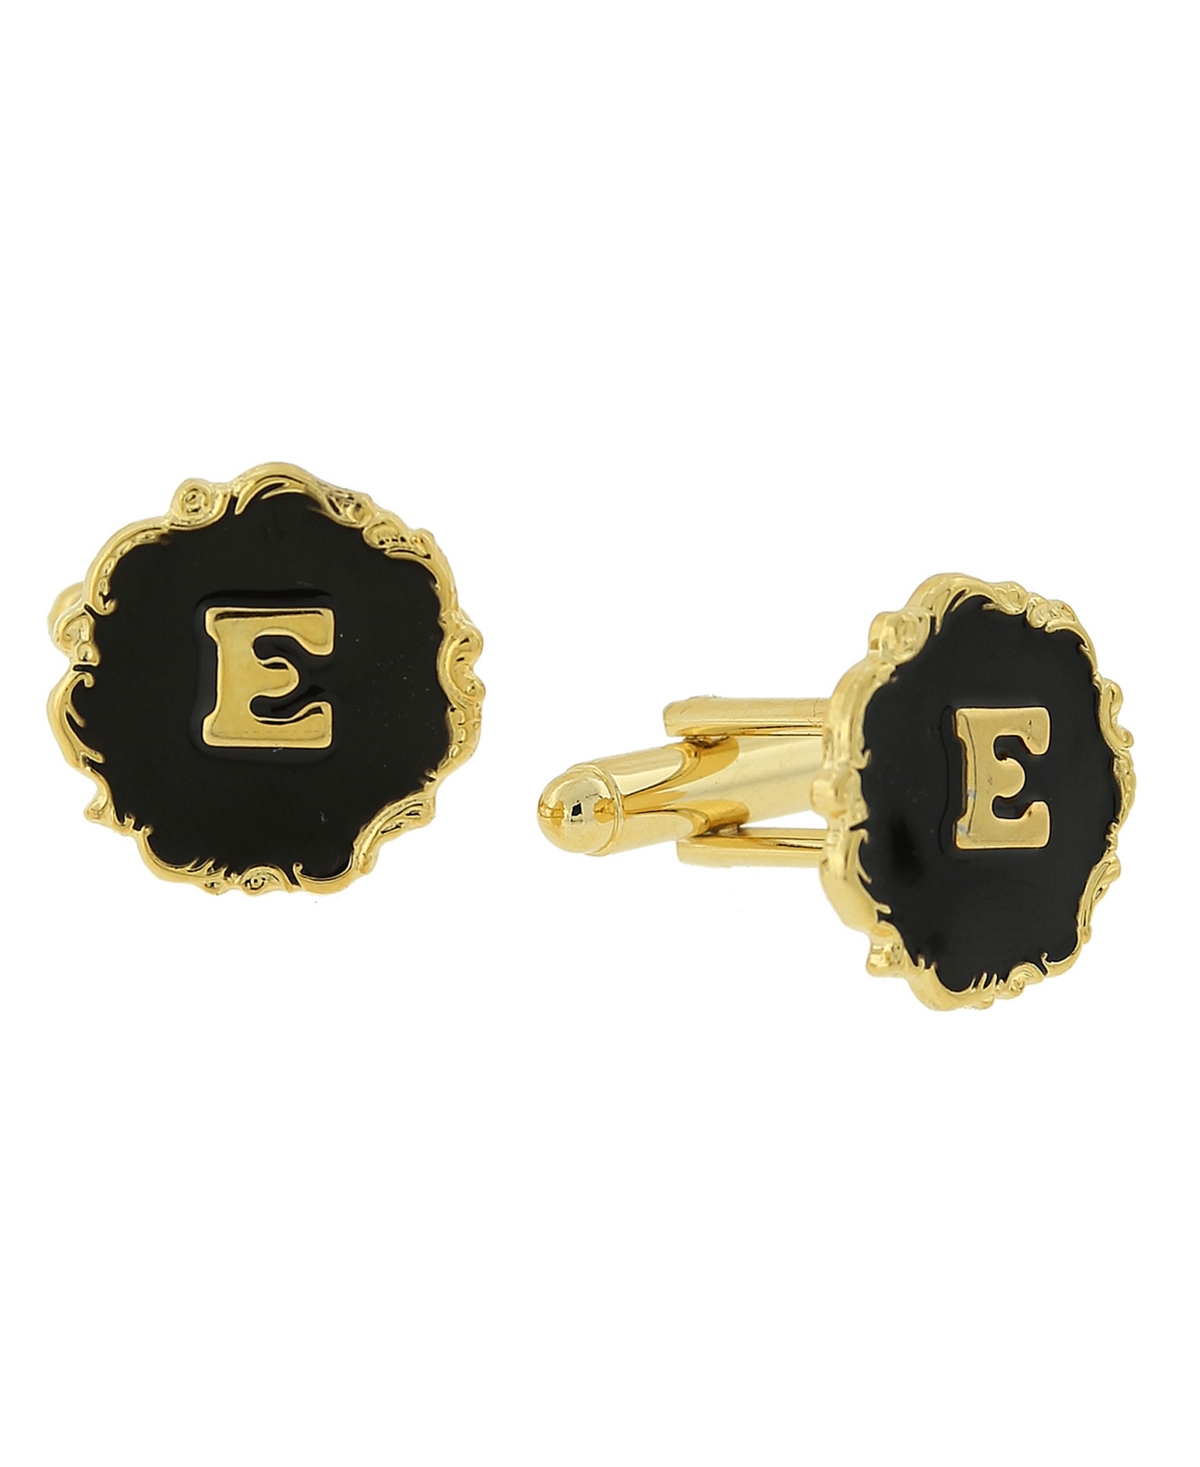 Jewelry 14K Gold-Plated Enamel Initial E Cufflinks - Black